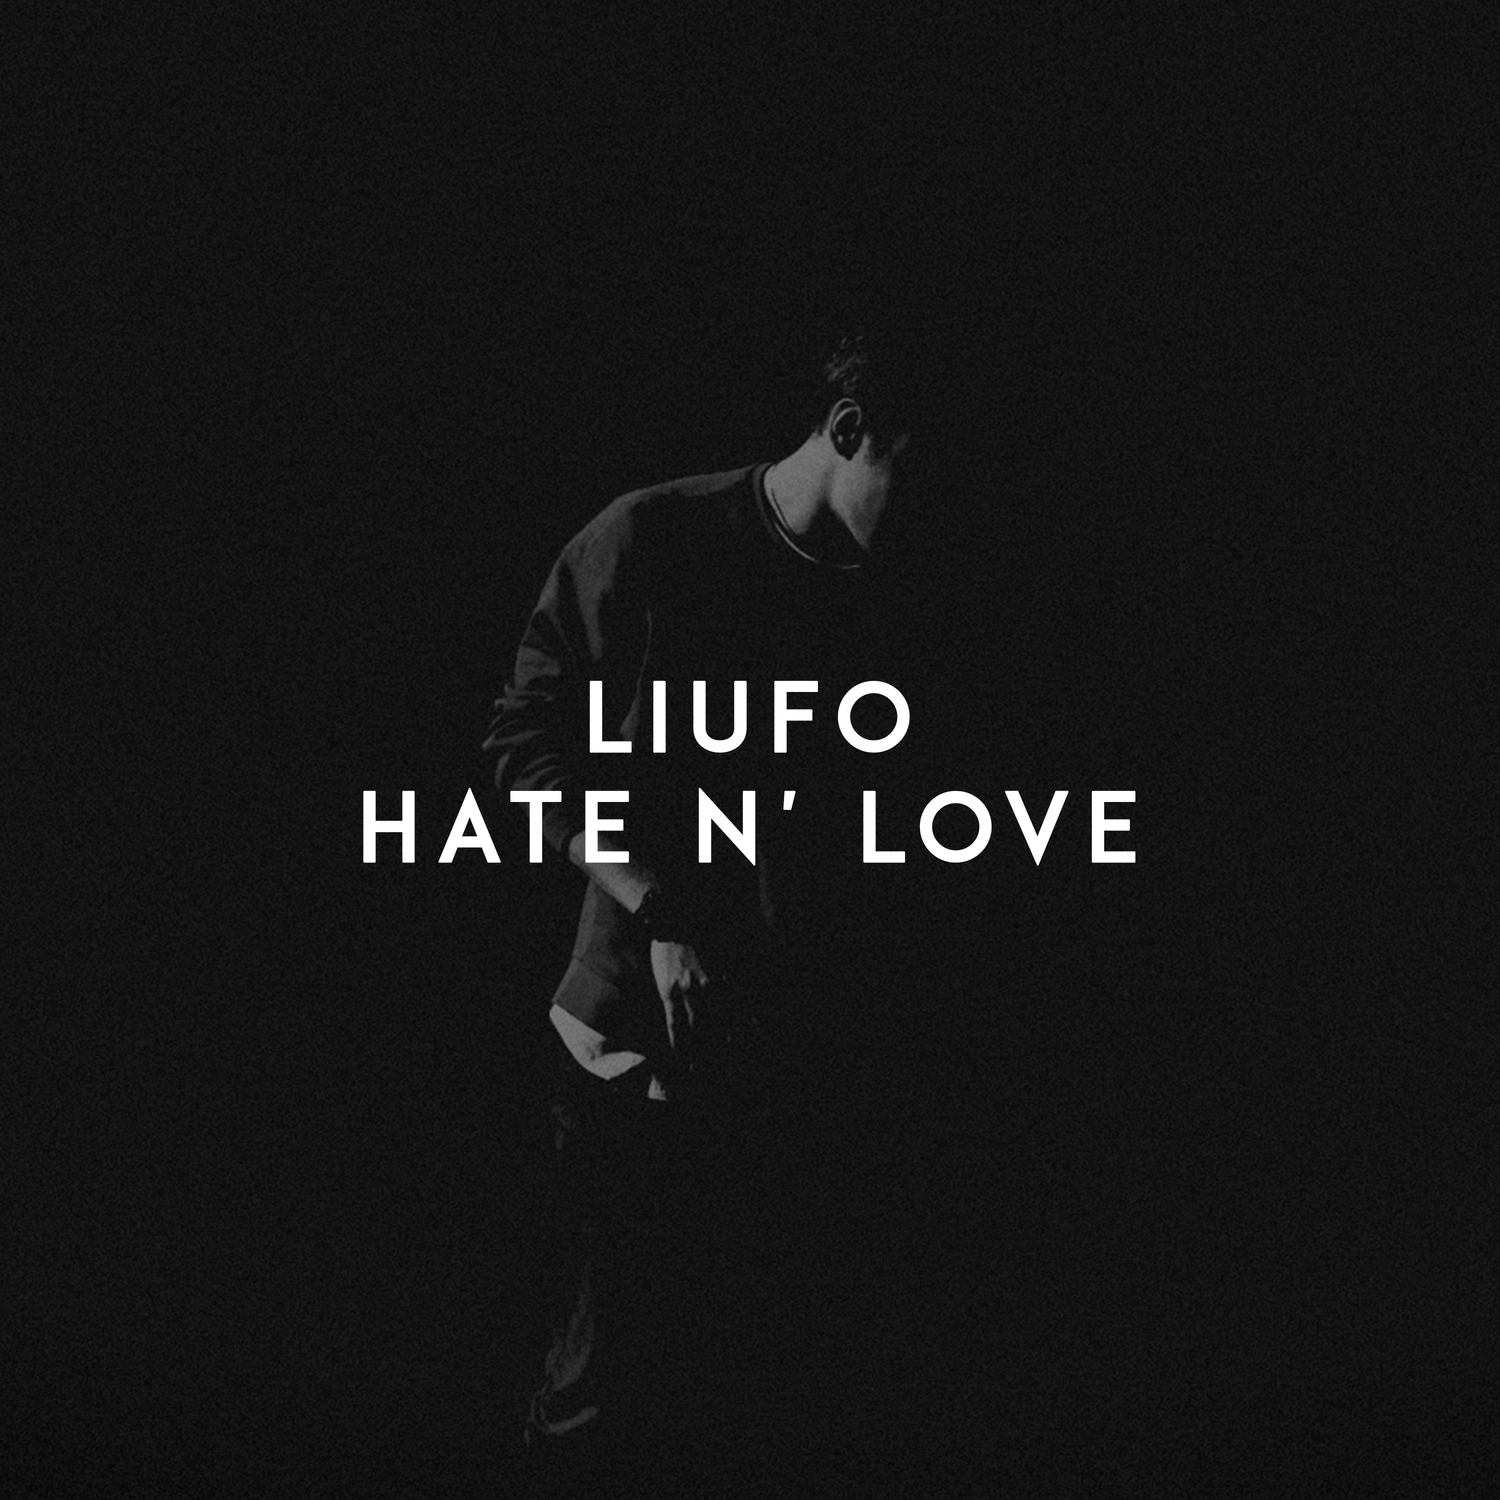 Hate n' Love